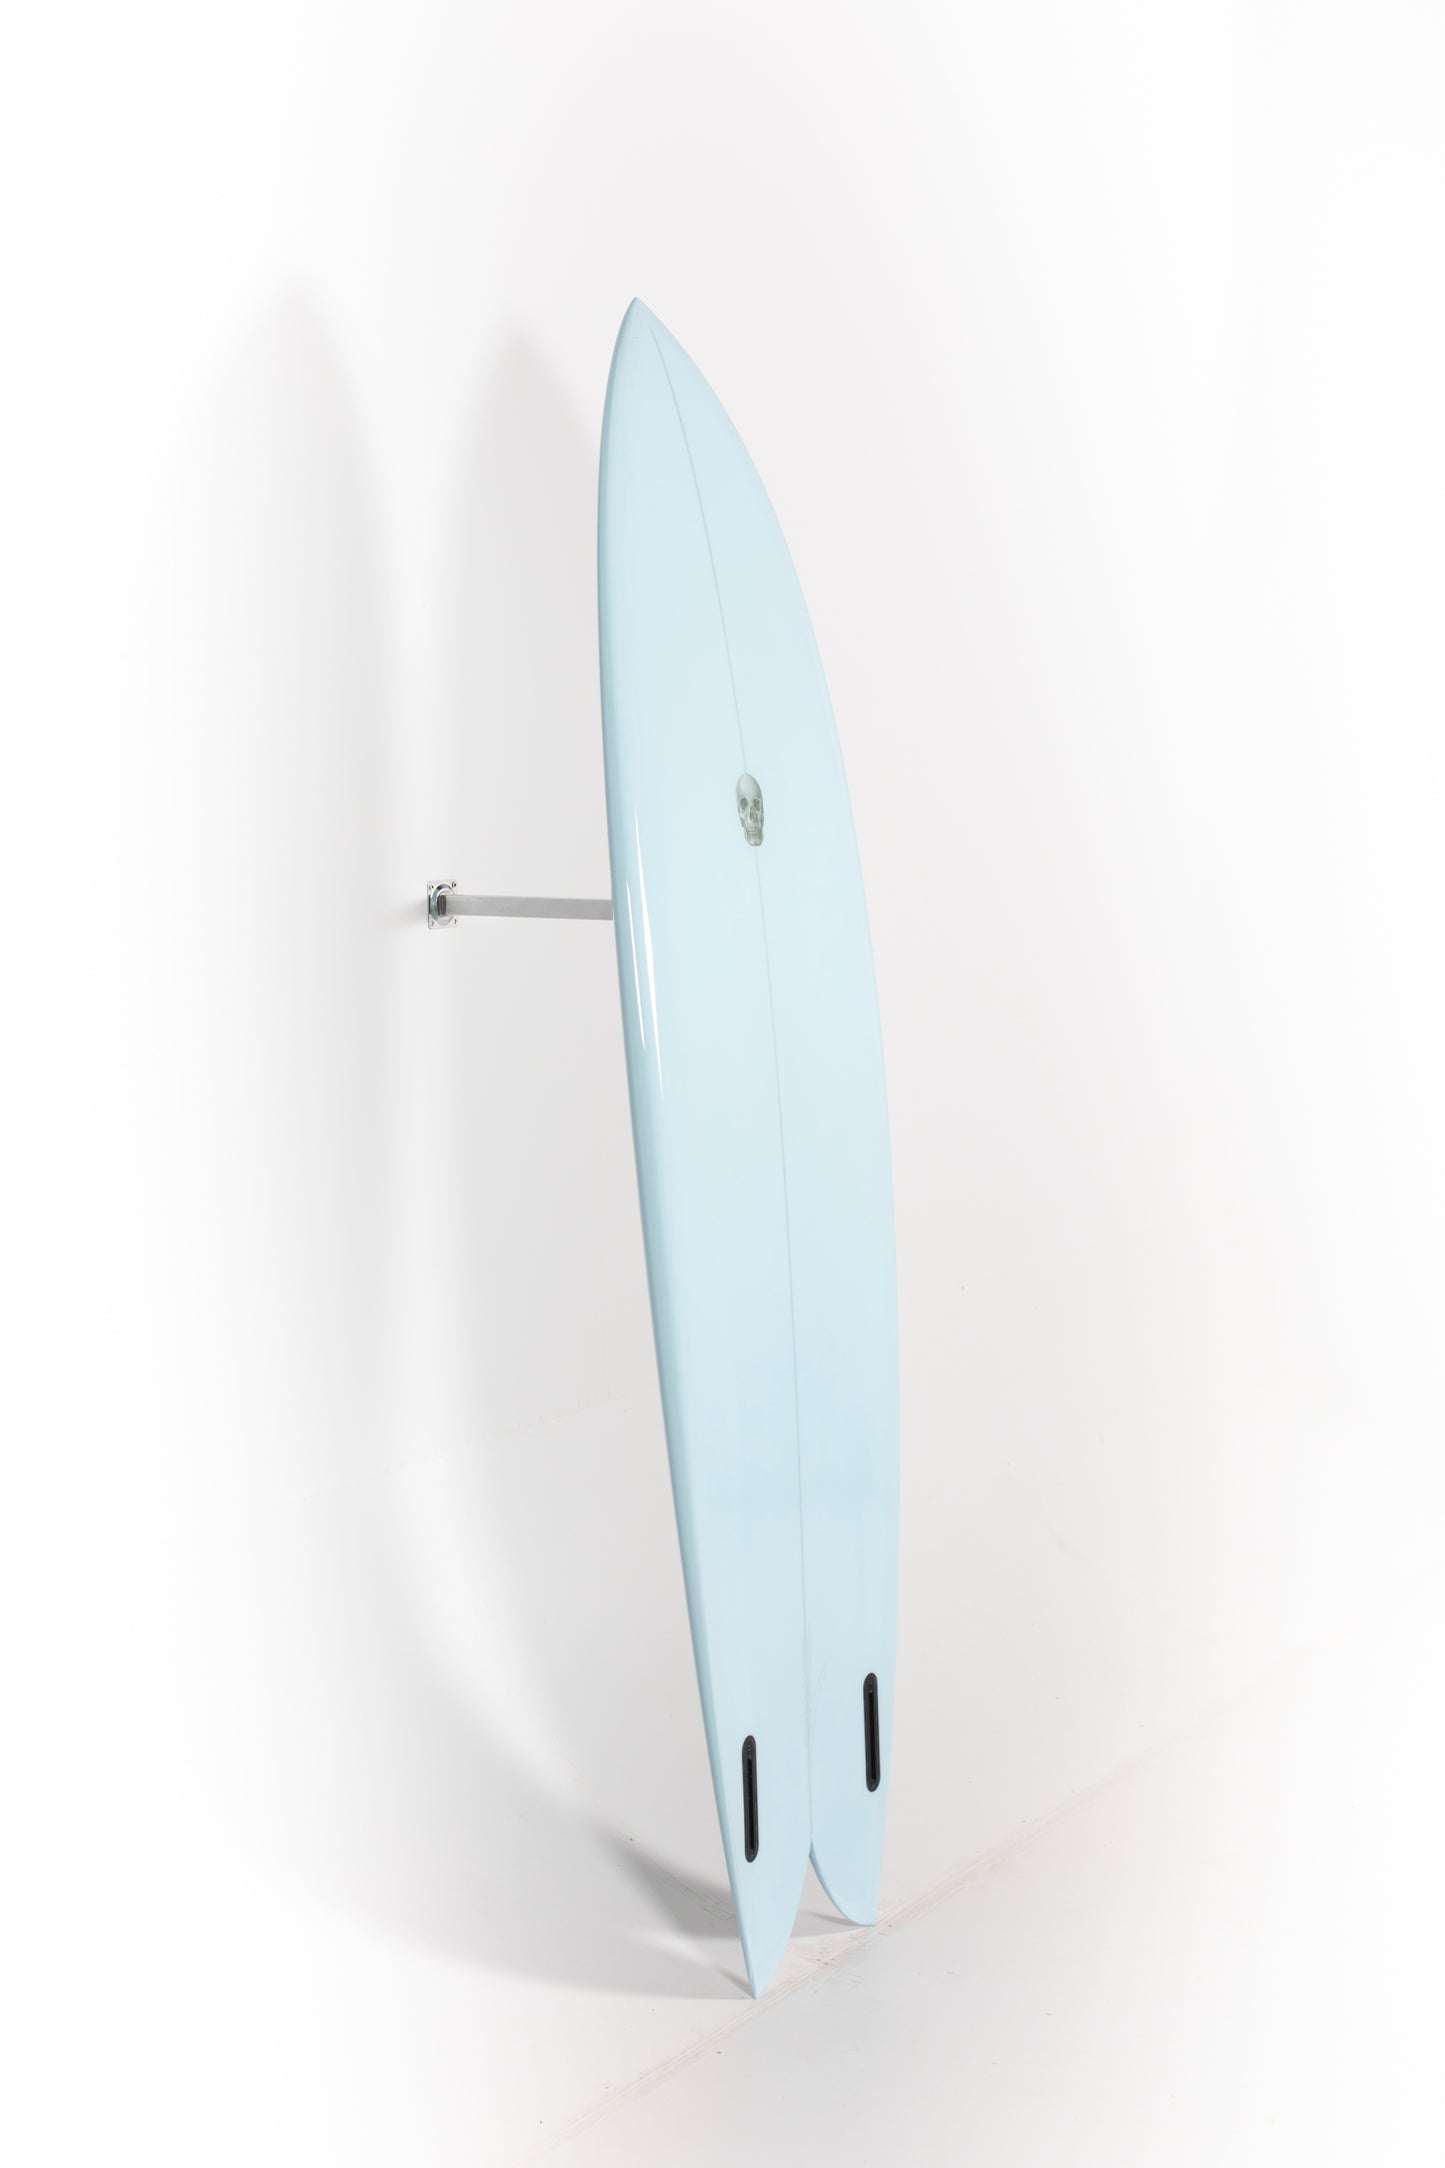 Christenson Surfboards - LONG PHISH - 6'8